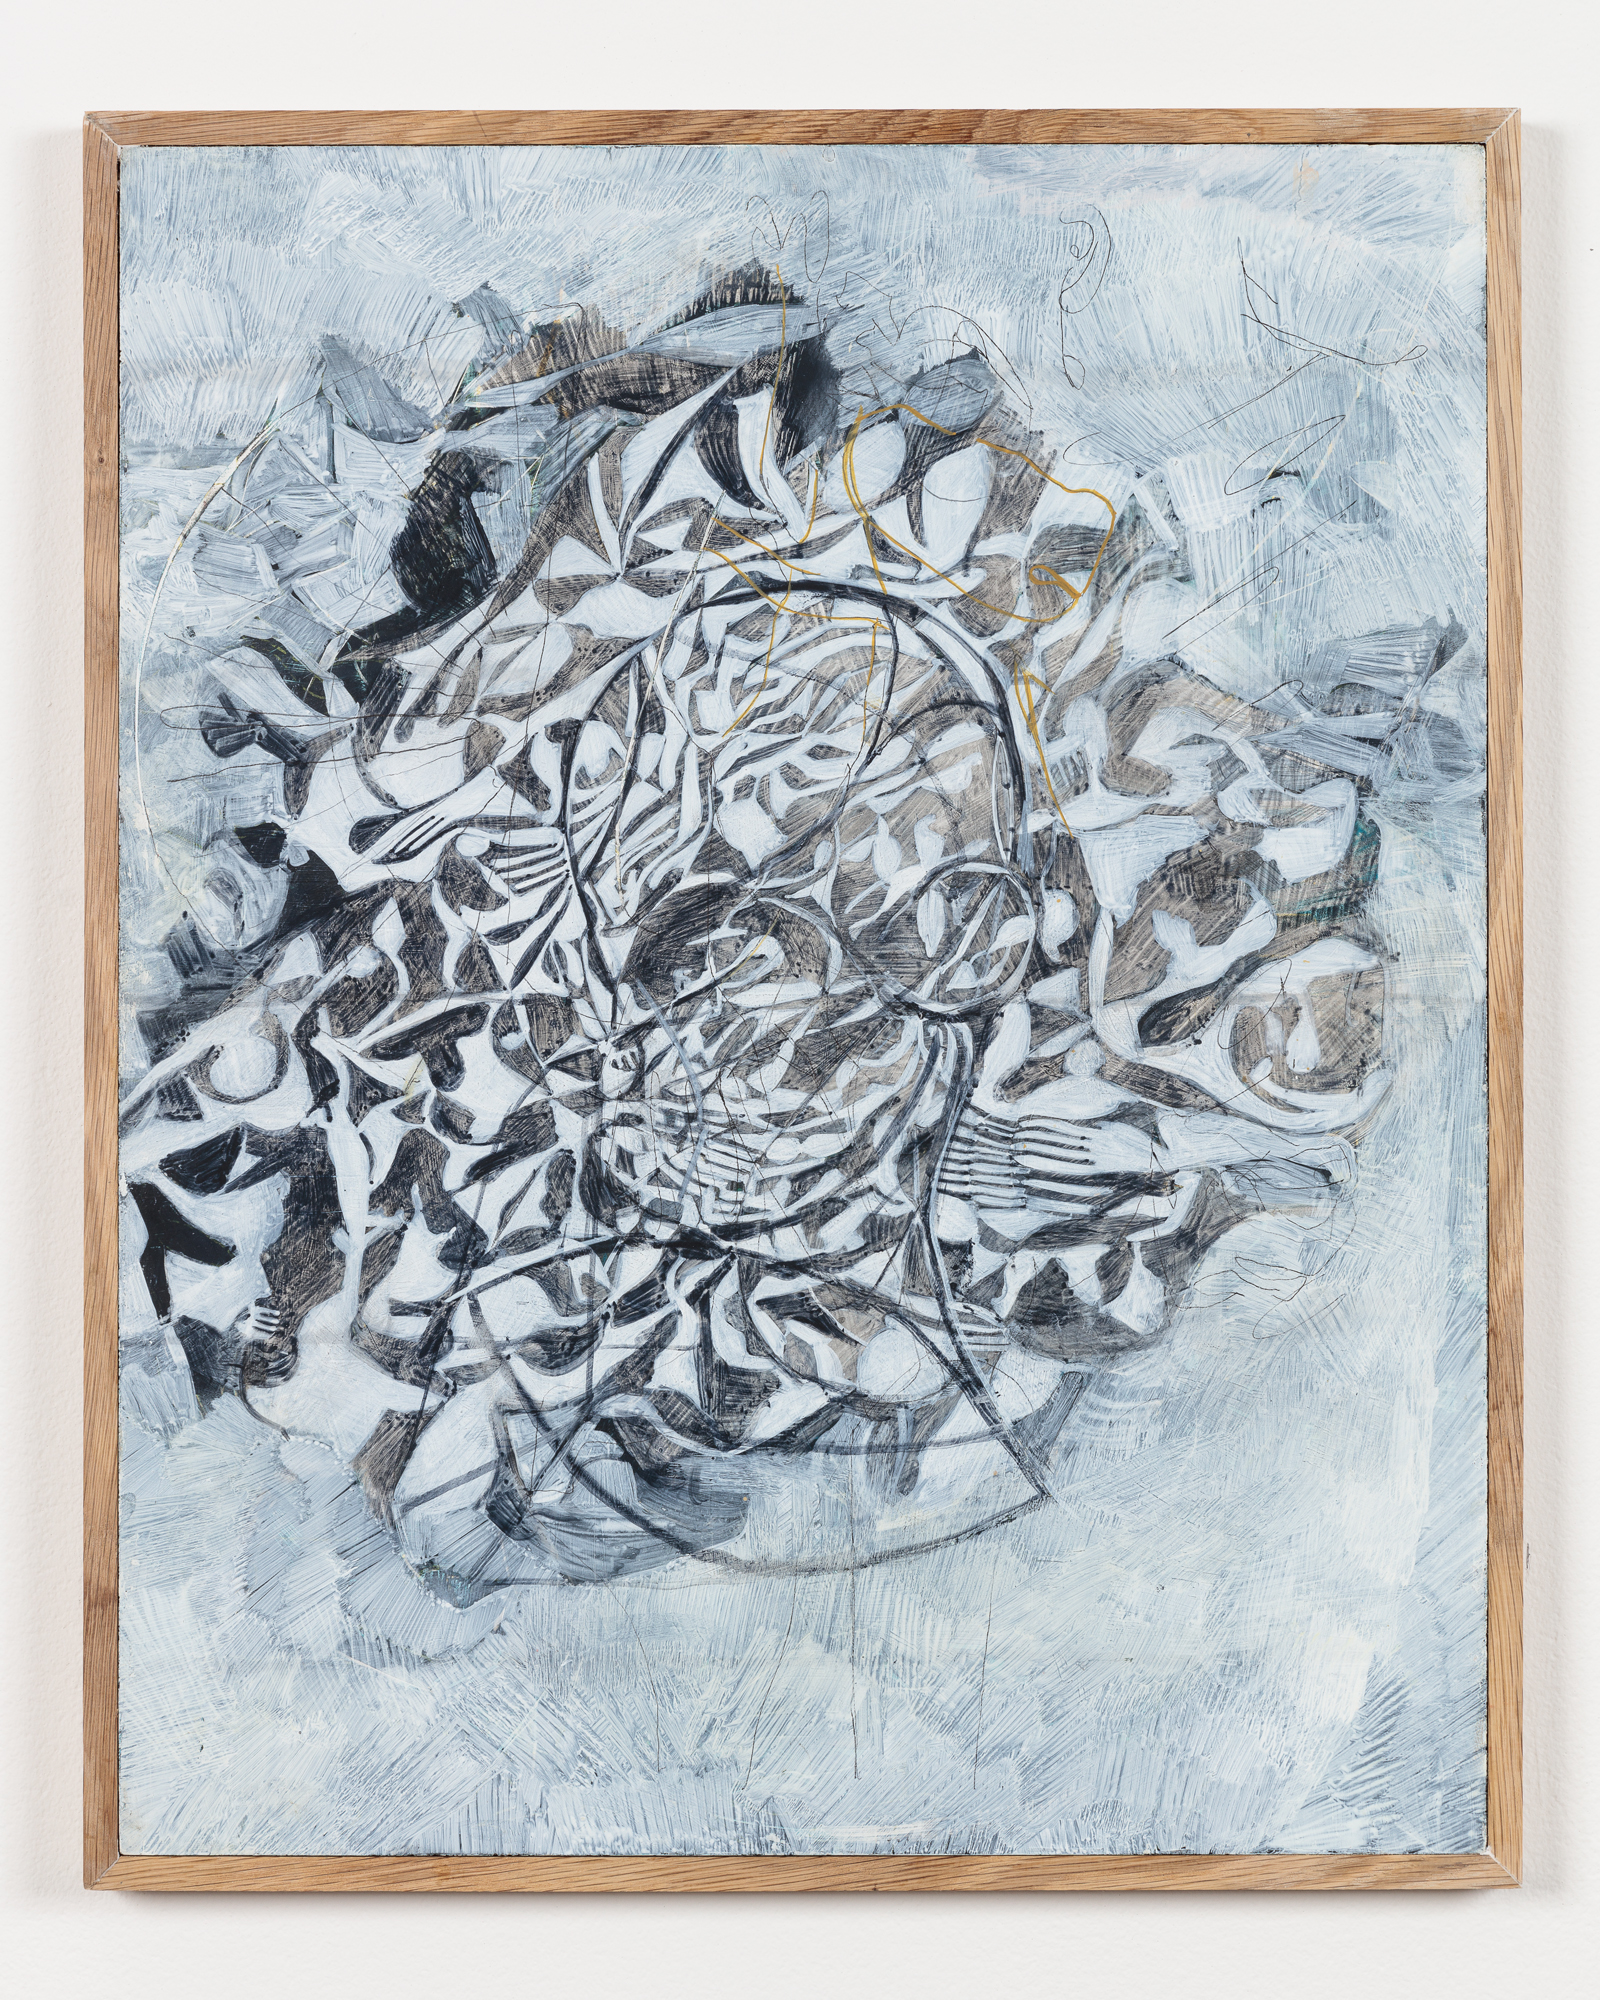 Nicholas Byrne, The cave, 2015, oil on gessoed panel with artists frame, 50 x 40 x 2 cm, 19 3/4 x 15 3/4 x 3/4 ins. Nicholas Byrne